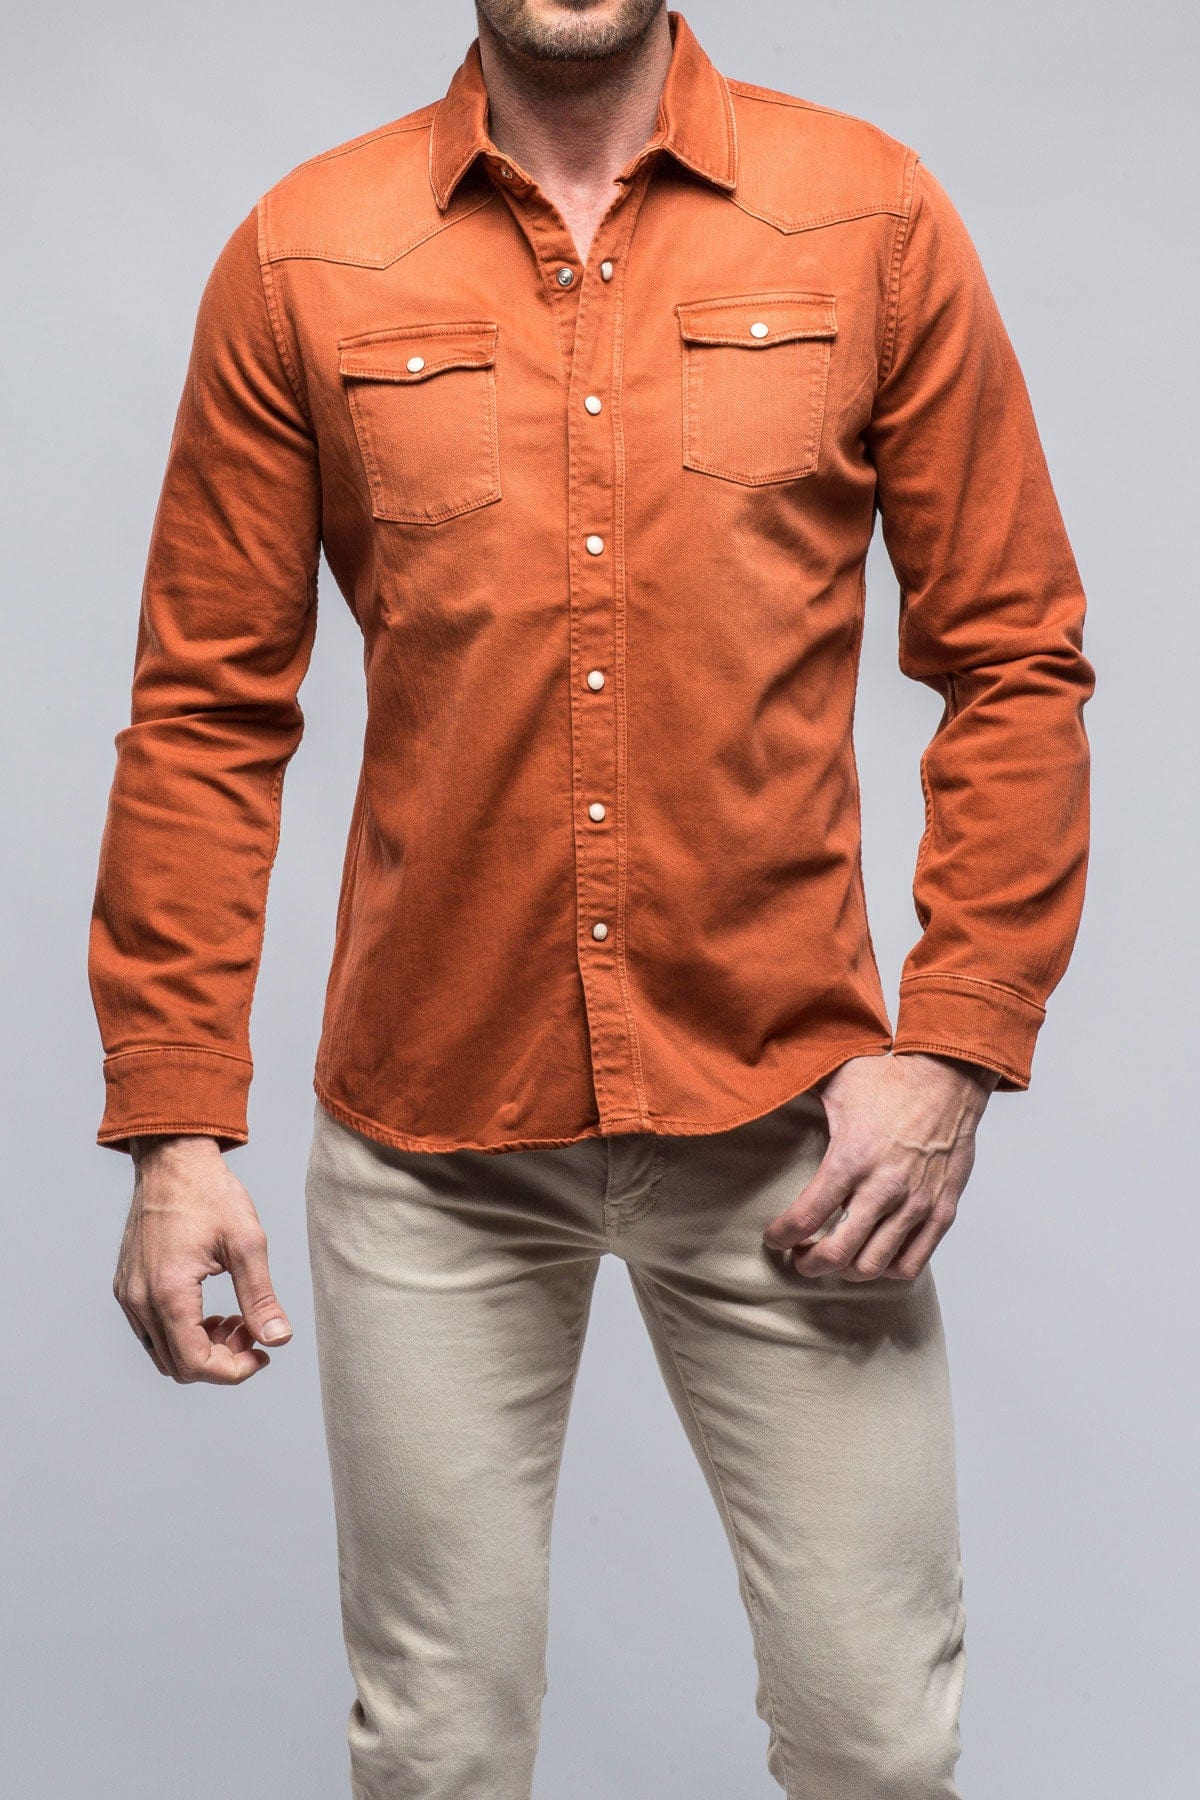 Ranger Colored Denim Snap Shirt In Coccio - AXEL'S